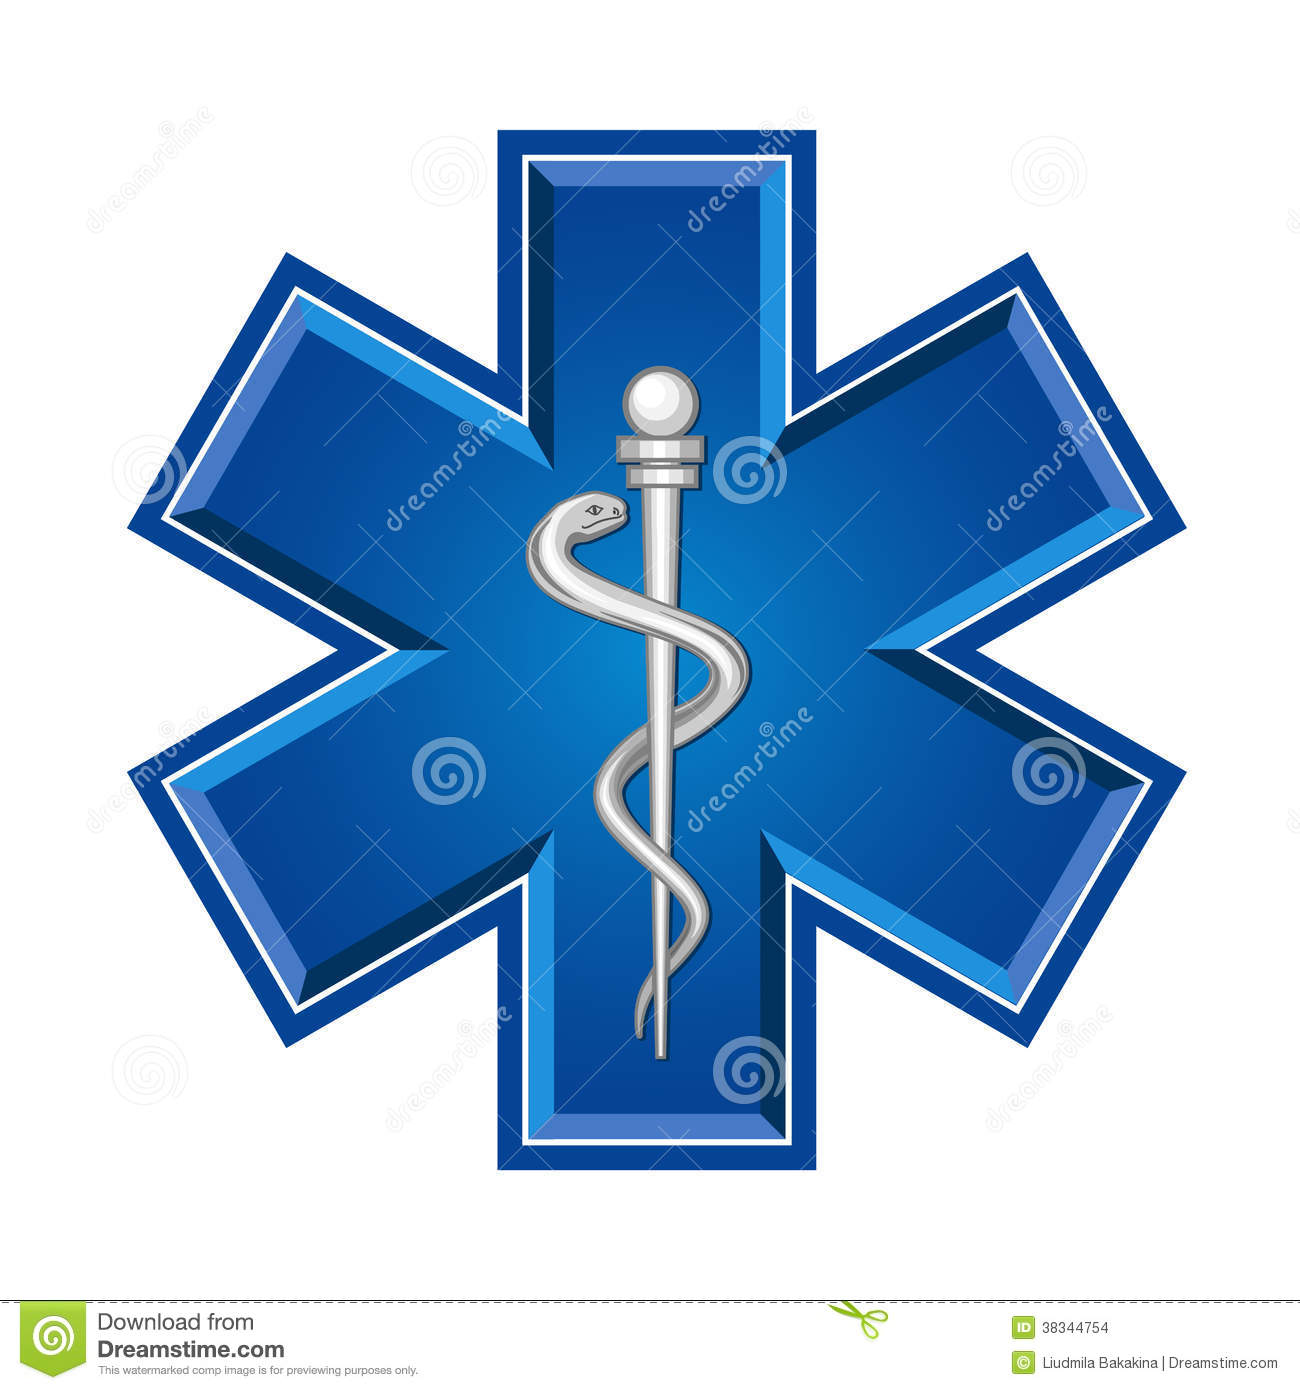 Emergency Medical Symbols